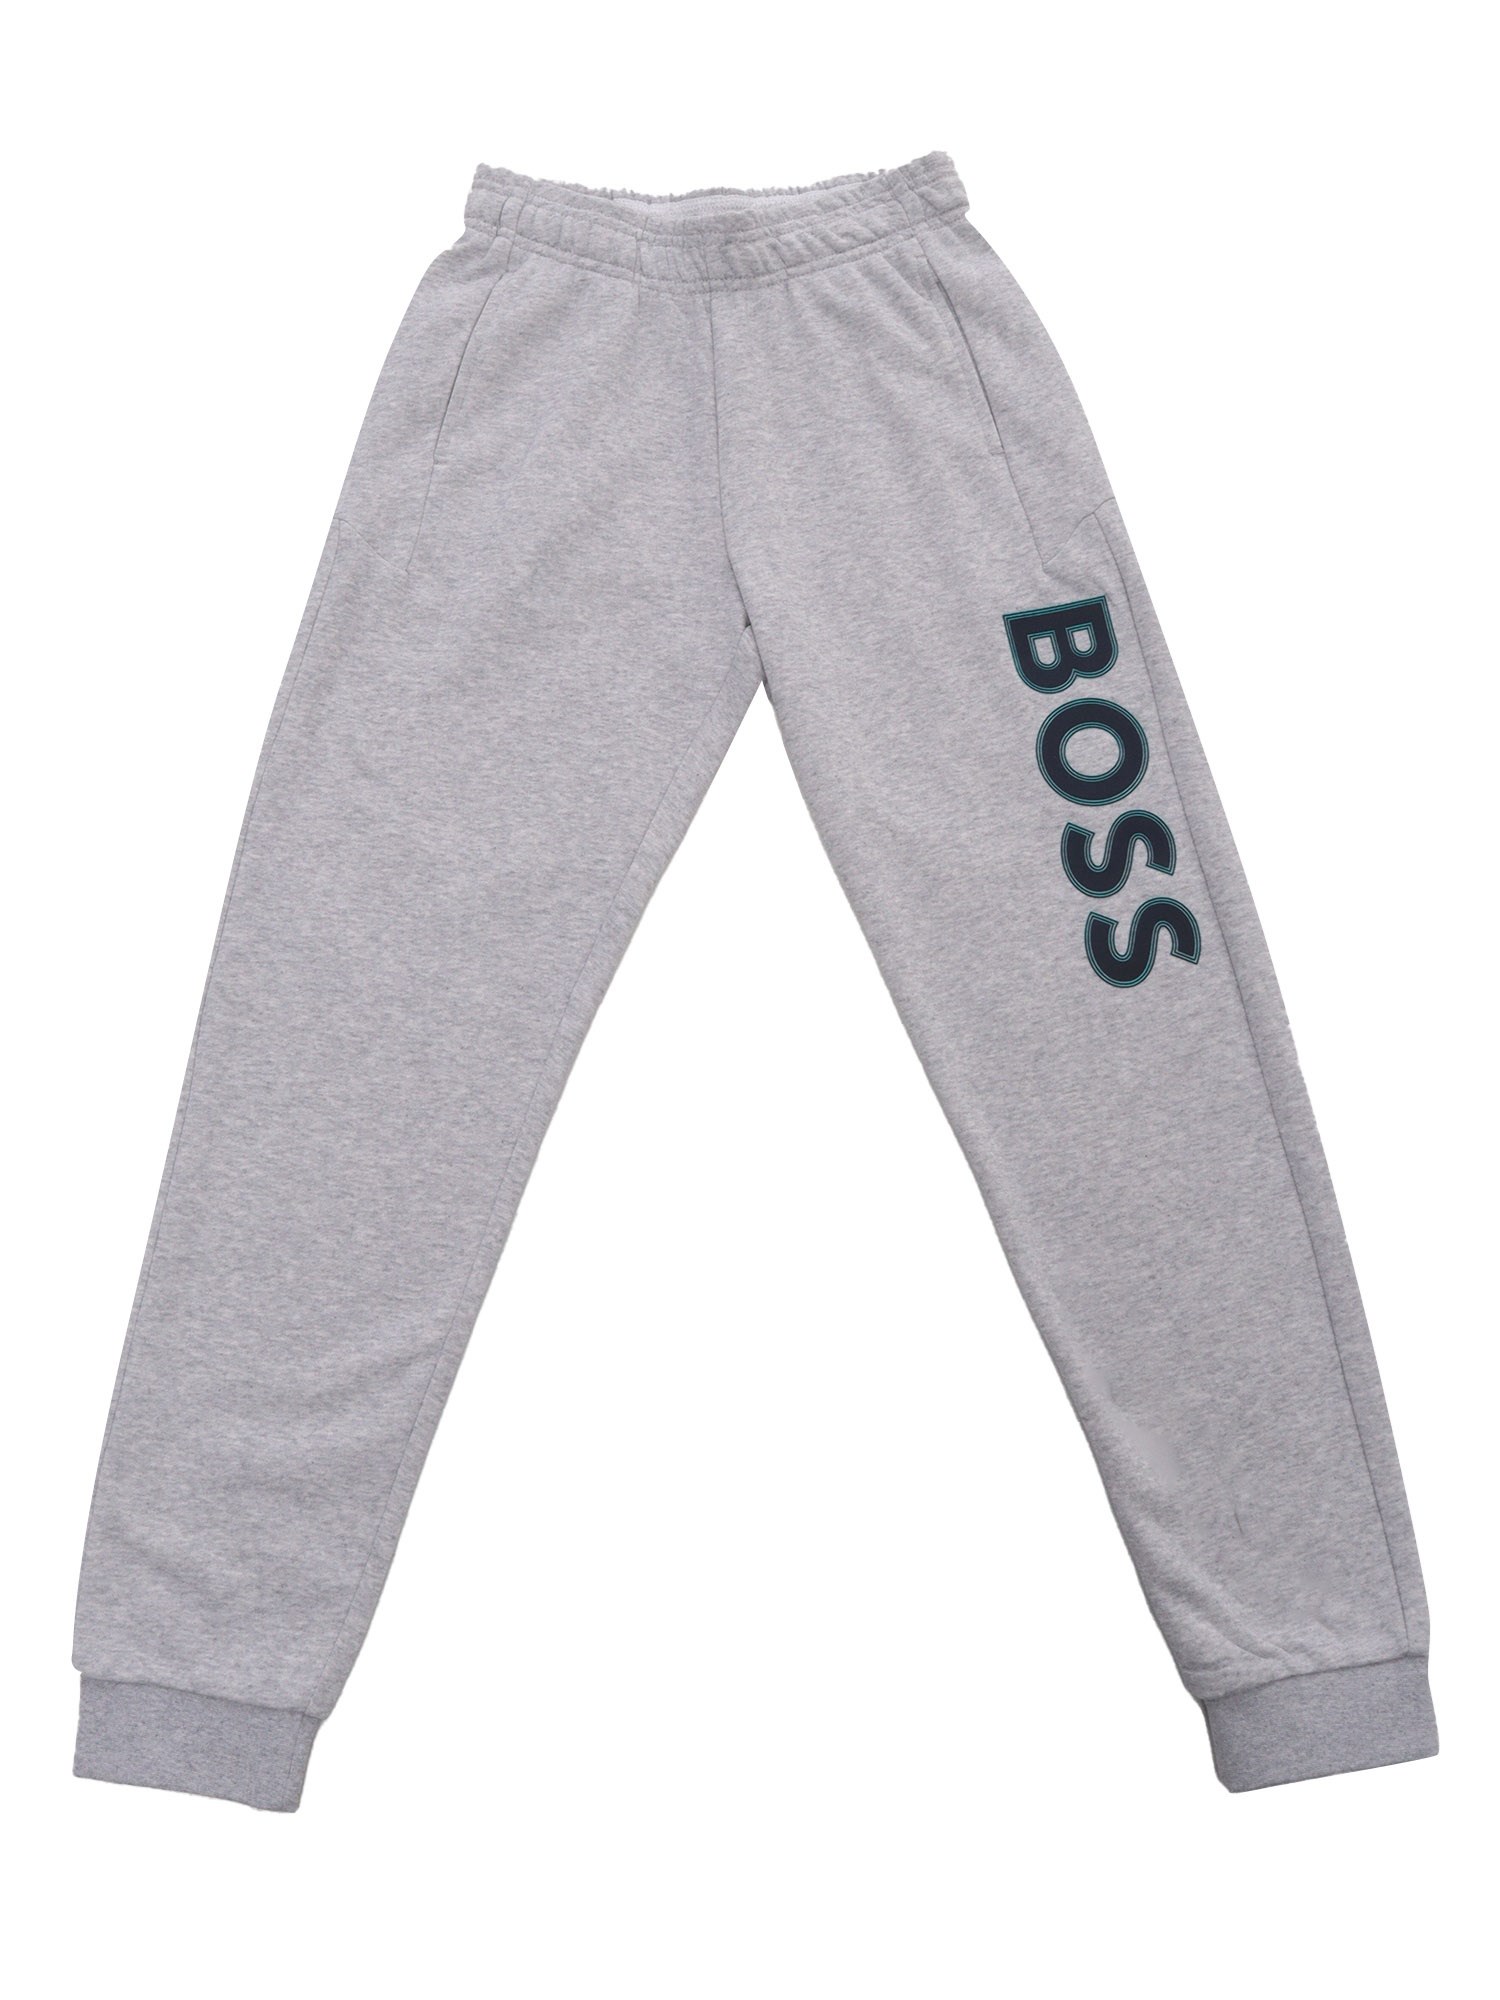 Hugo Boss Grey Jogging Trousers